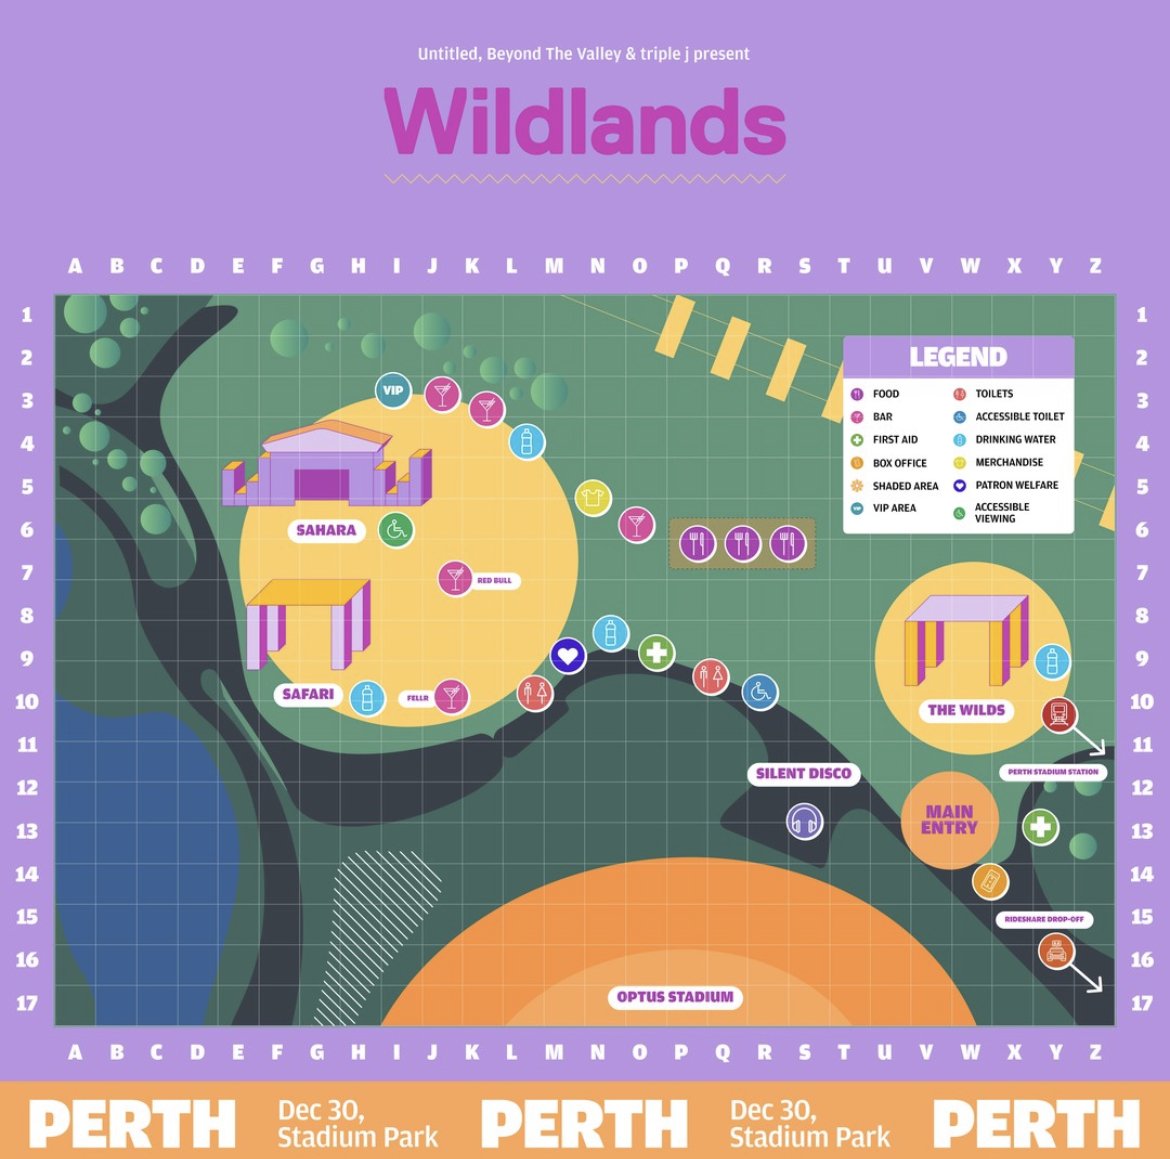 Wildlands Perth